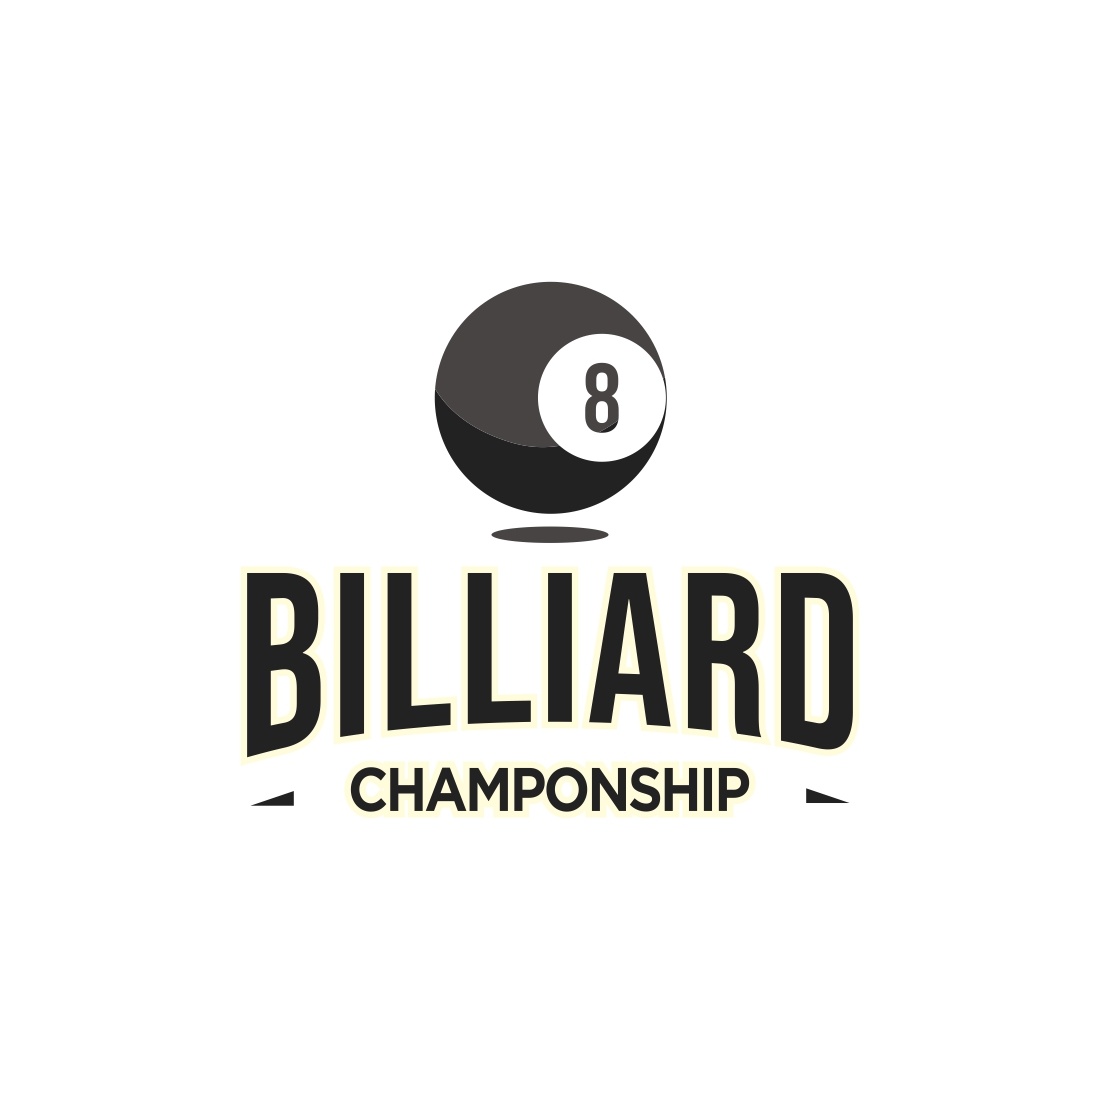 Billiards logo, Sports label for billiards room, Billiards logo template cover image.